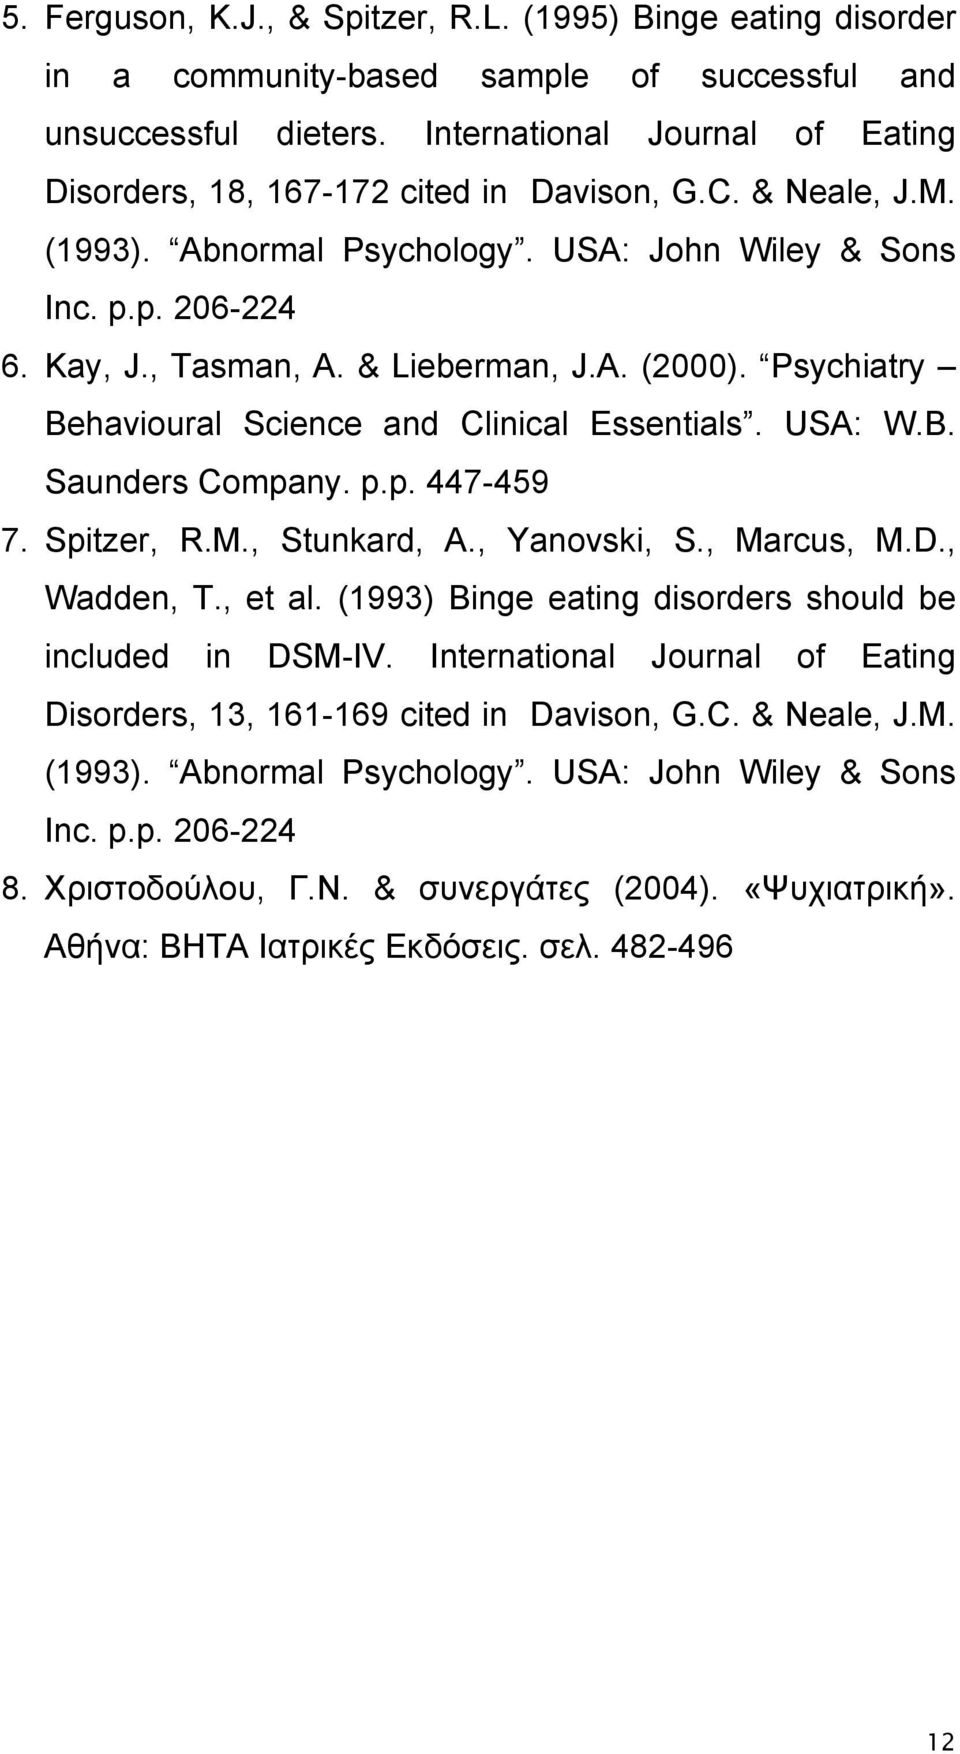 A. (2000). Psychiatry Behavioural Science and Clinical Essentials. USA: W.B. Saunders Company. p.p. 447-459 7. Spitzer, R.M., Stunkard, A., Yanovski, S., Marcus, M.D., Wadden, T., et al.